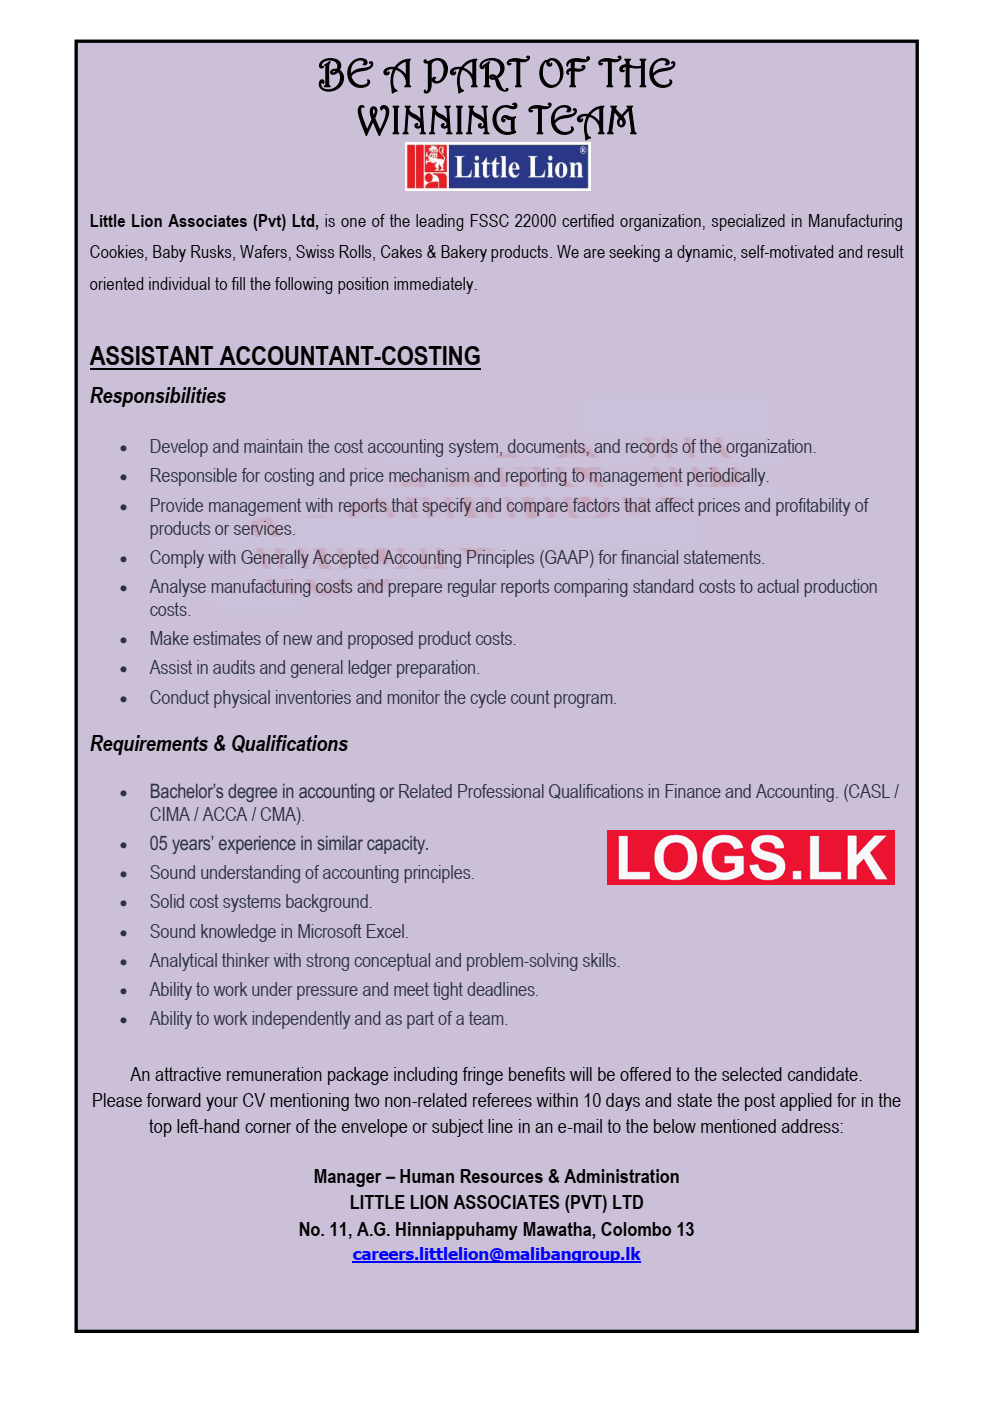 Assistant Accountant (Costing) Vacancy in Little Lion Associates (Pvt) Ltd Job Vacancies in Sri Lanka